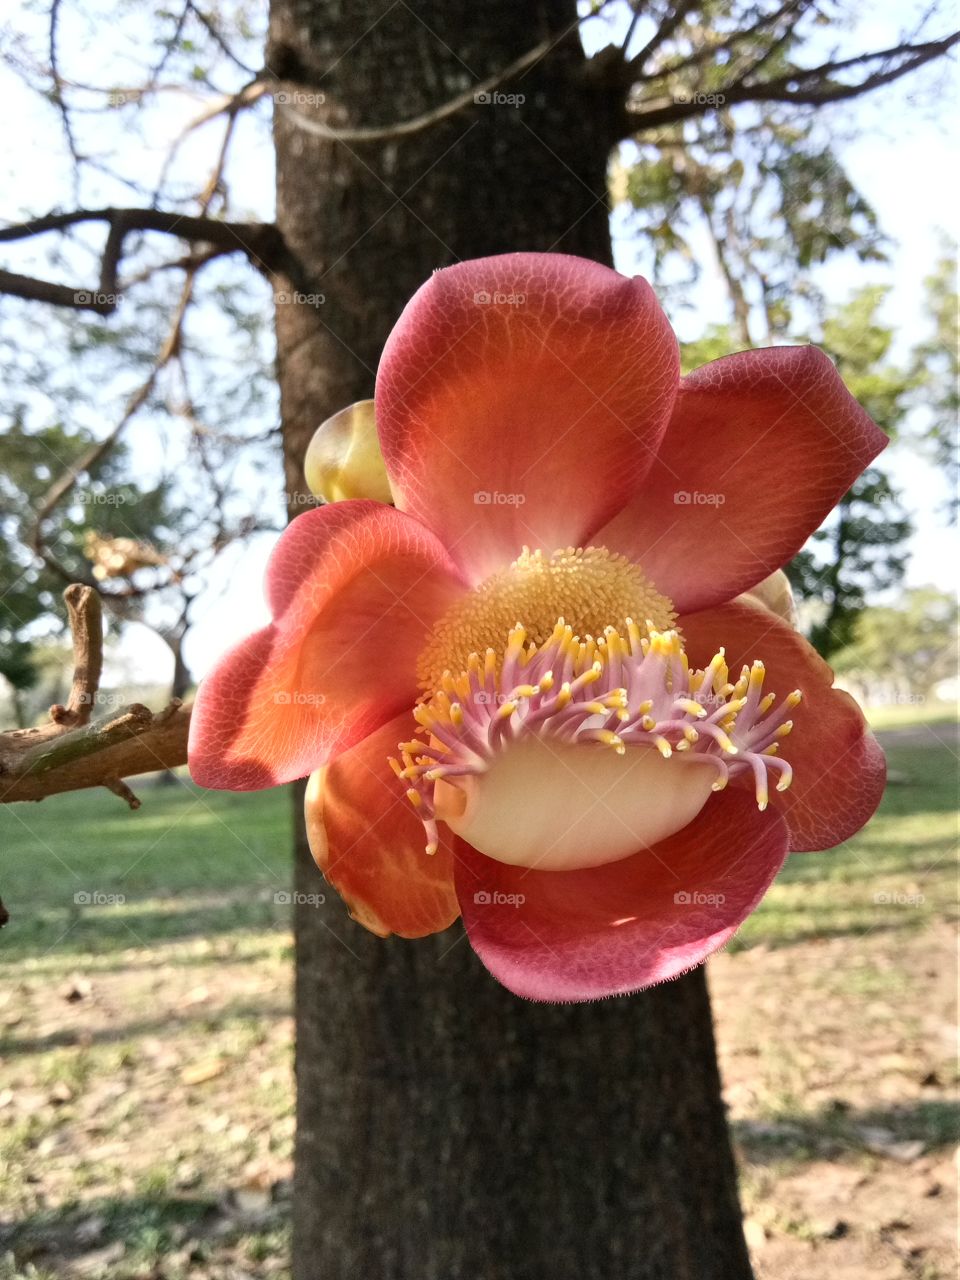 Sara Lanka flower : View :Tree and flower in Phutthamonthon (Buddha Monthon) : Buddhist park in the Phutthamonthon District, Nakhon Pathom Province of Thailand: beautiful